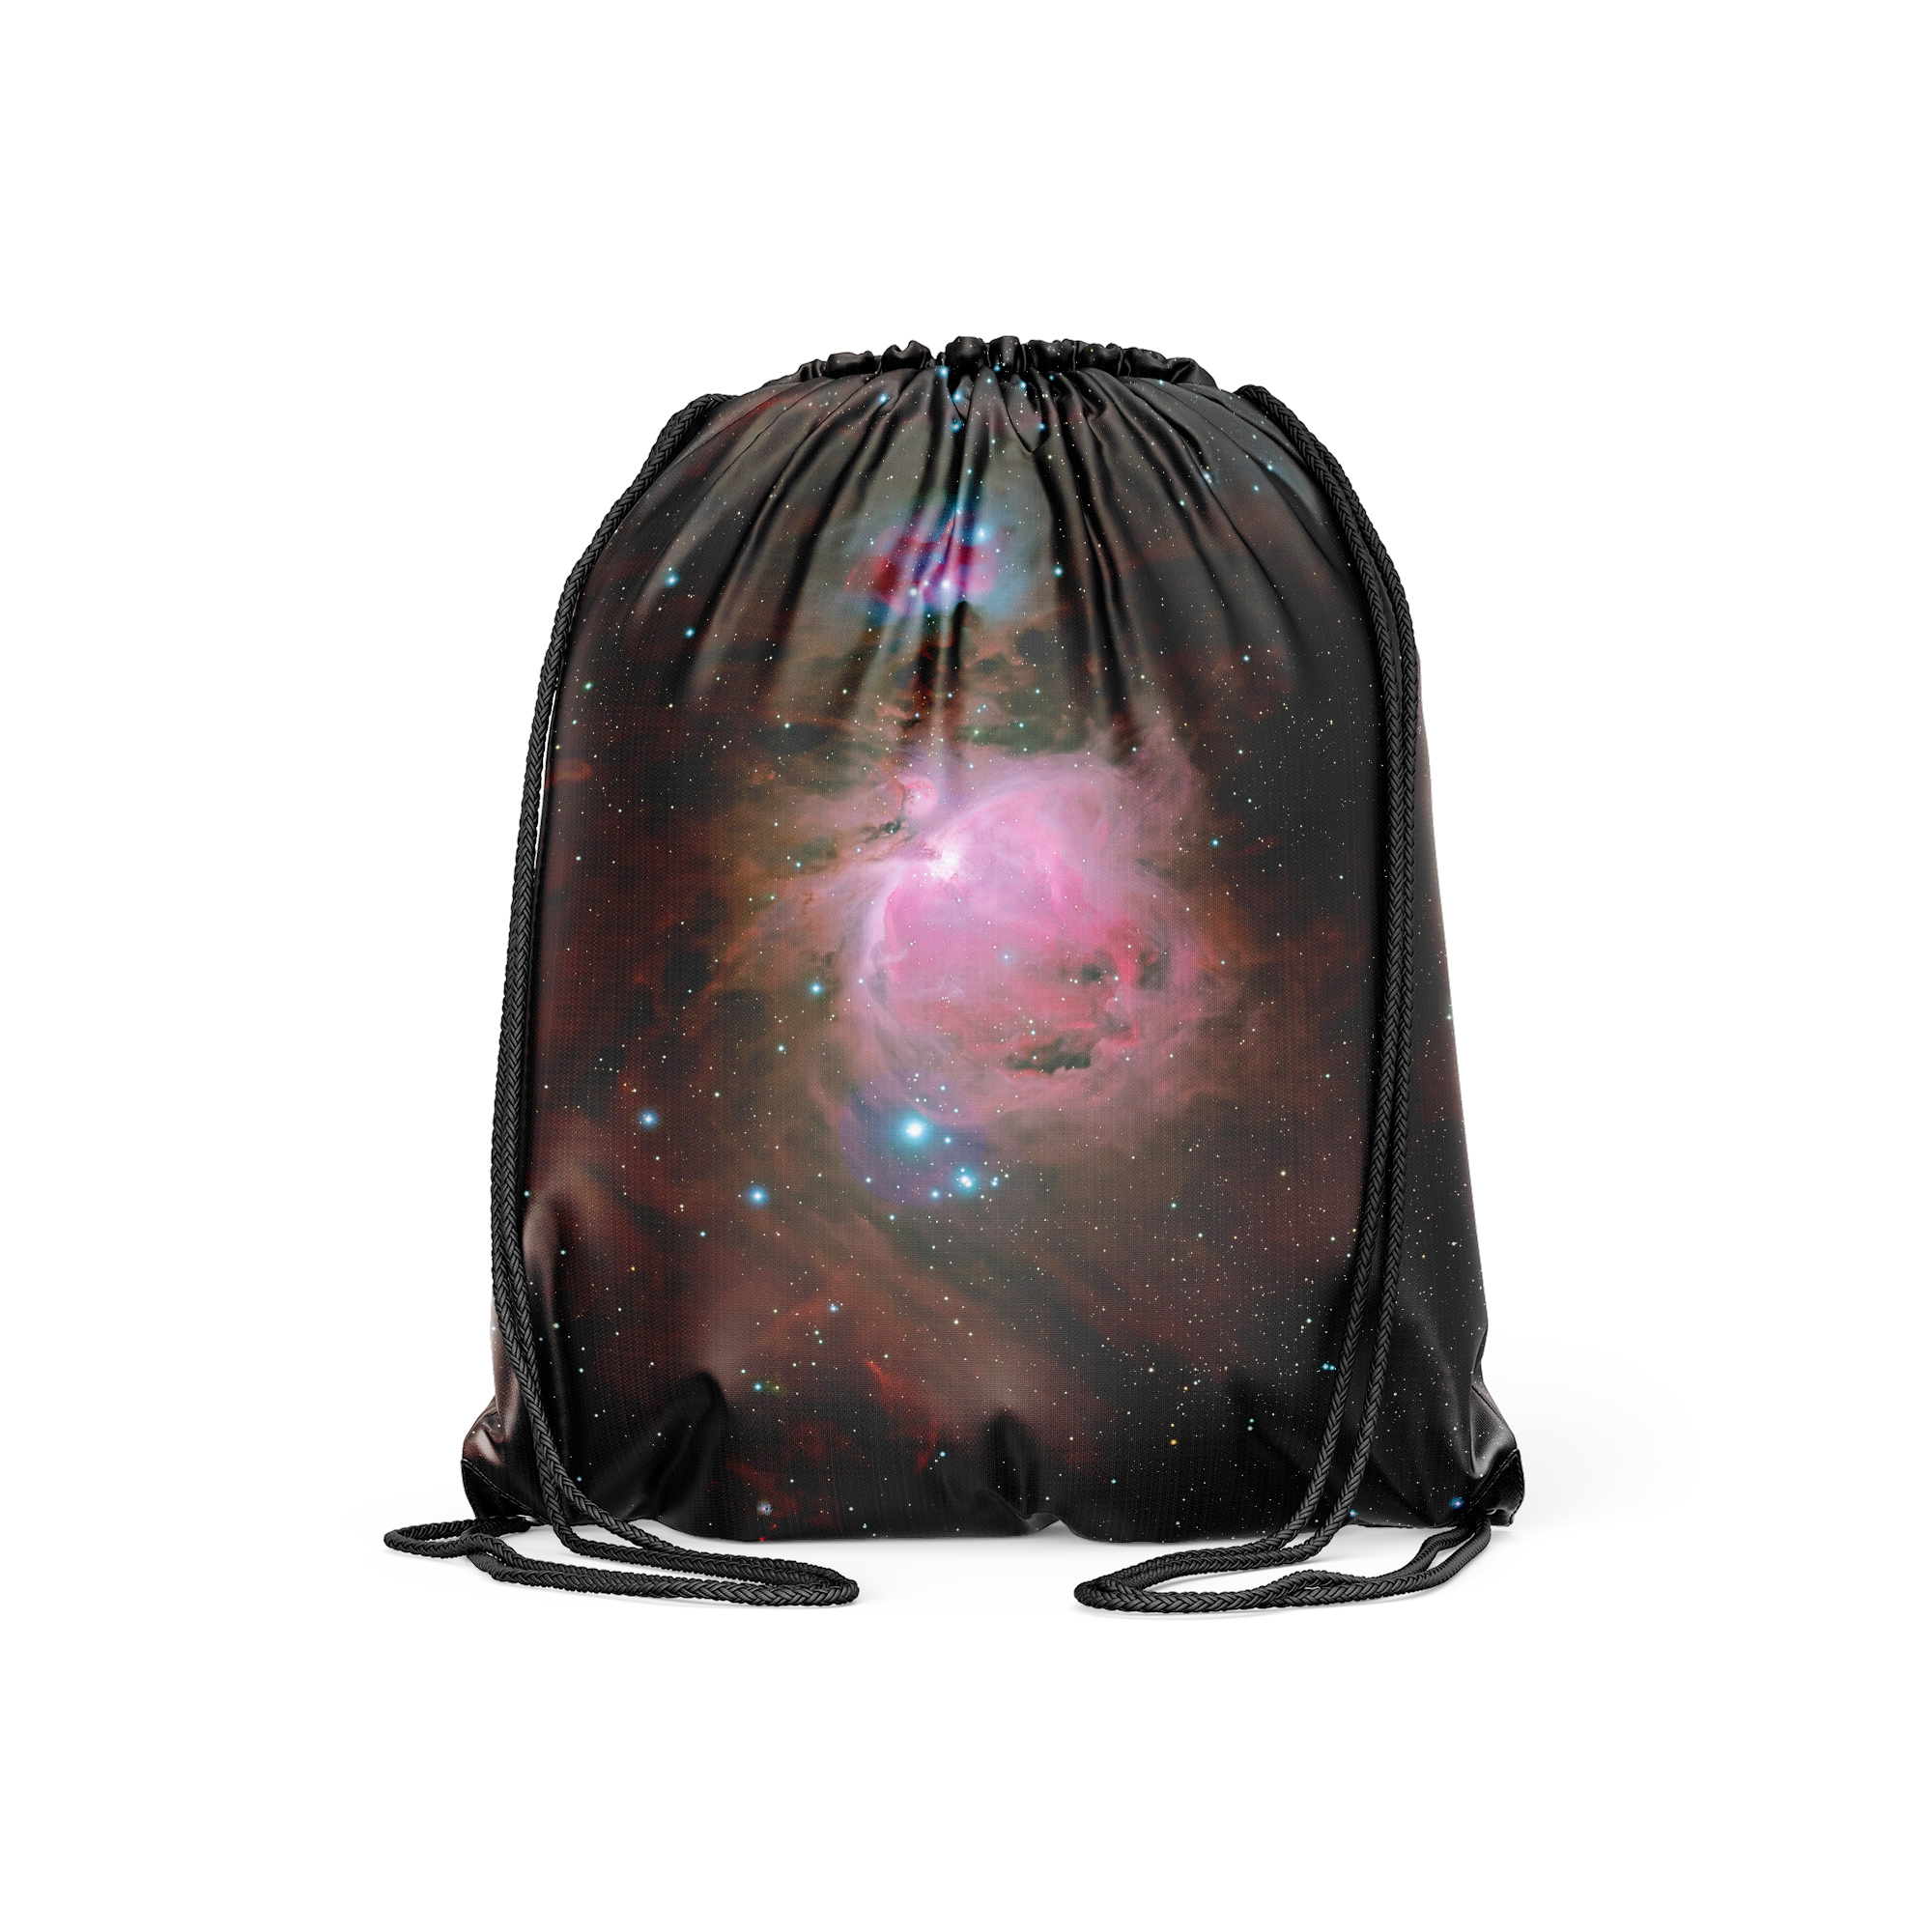 Oklop Astro Backpack - Orion Nebula